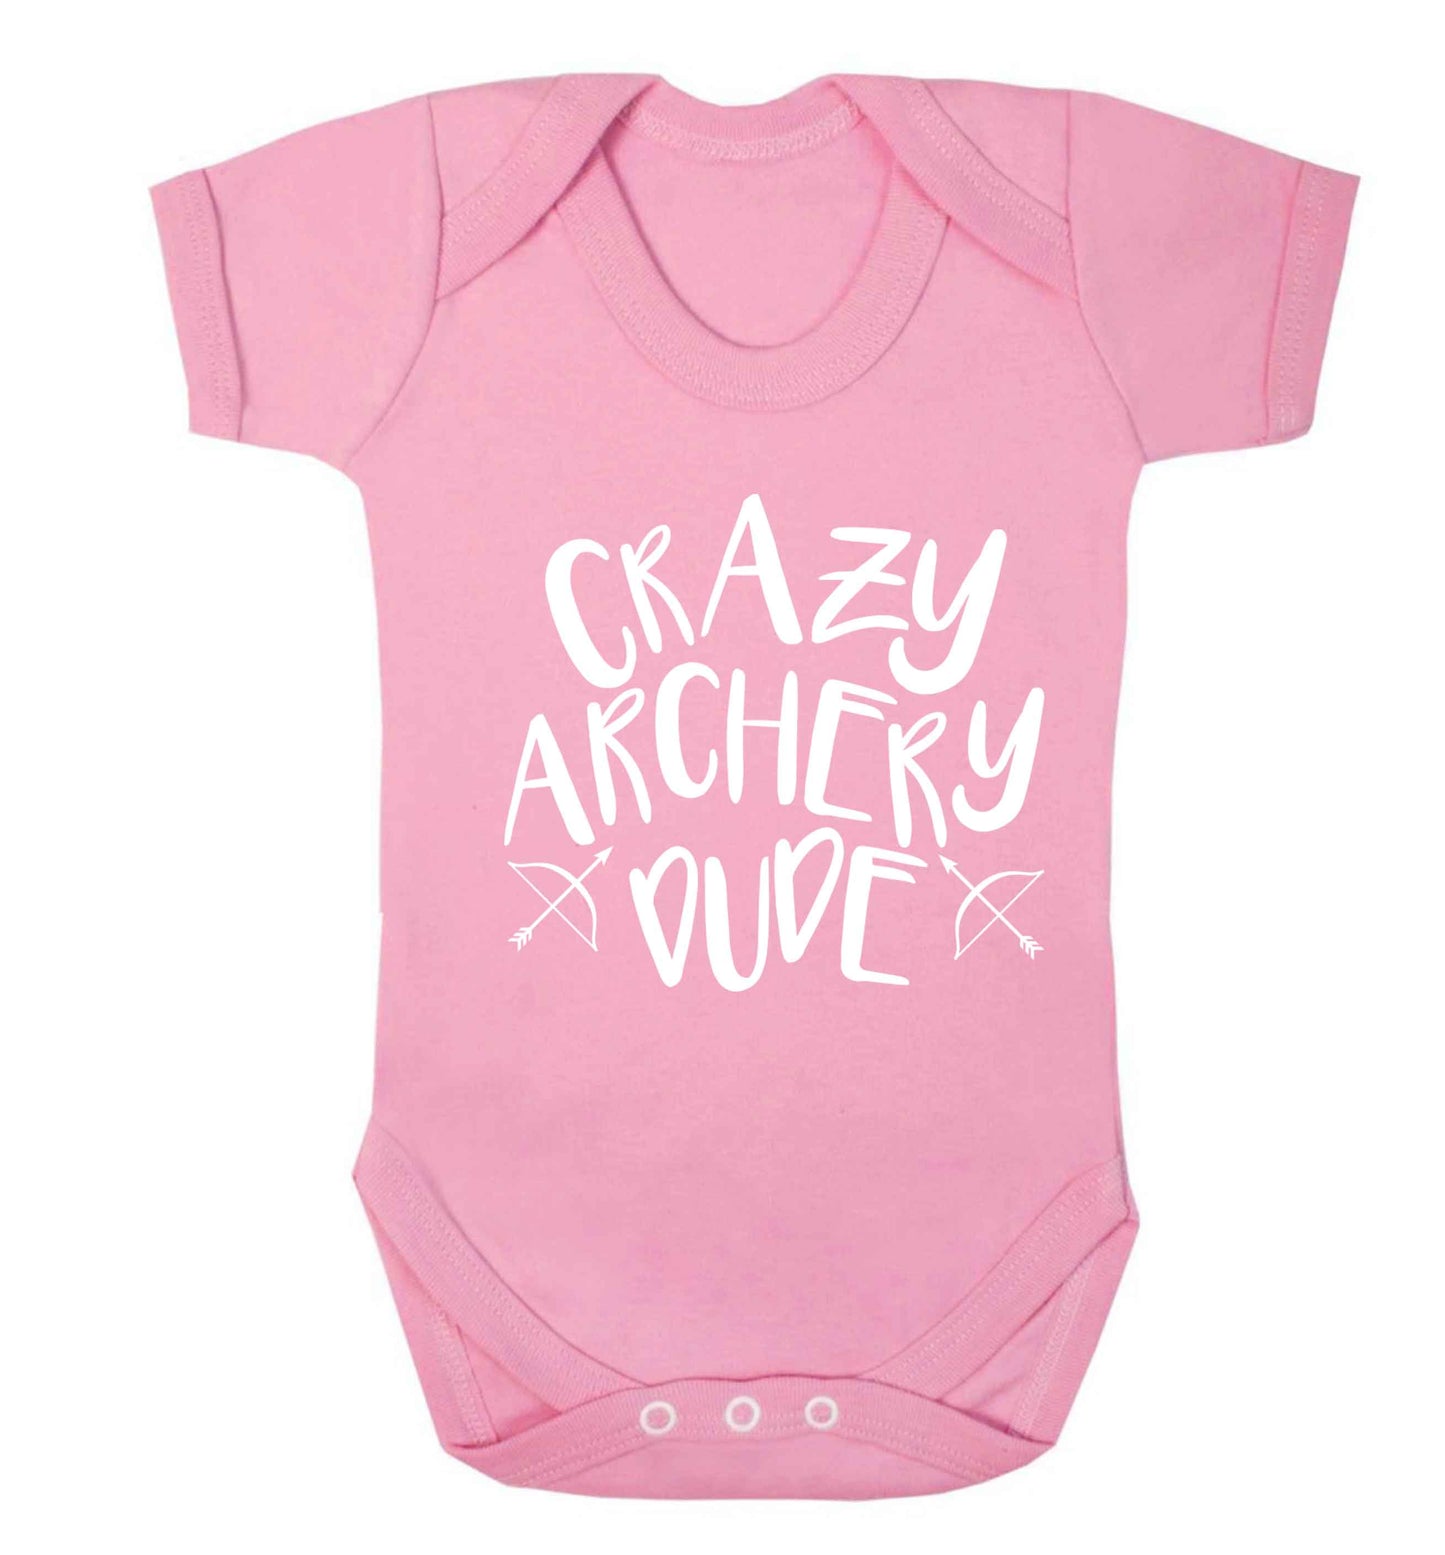 Crazy archery dude Baby Vest pale pink 18-24 months